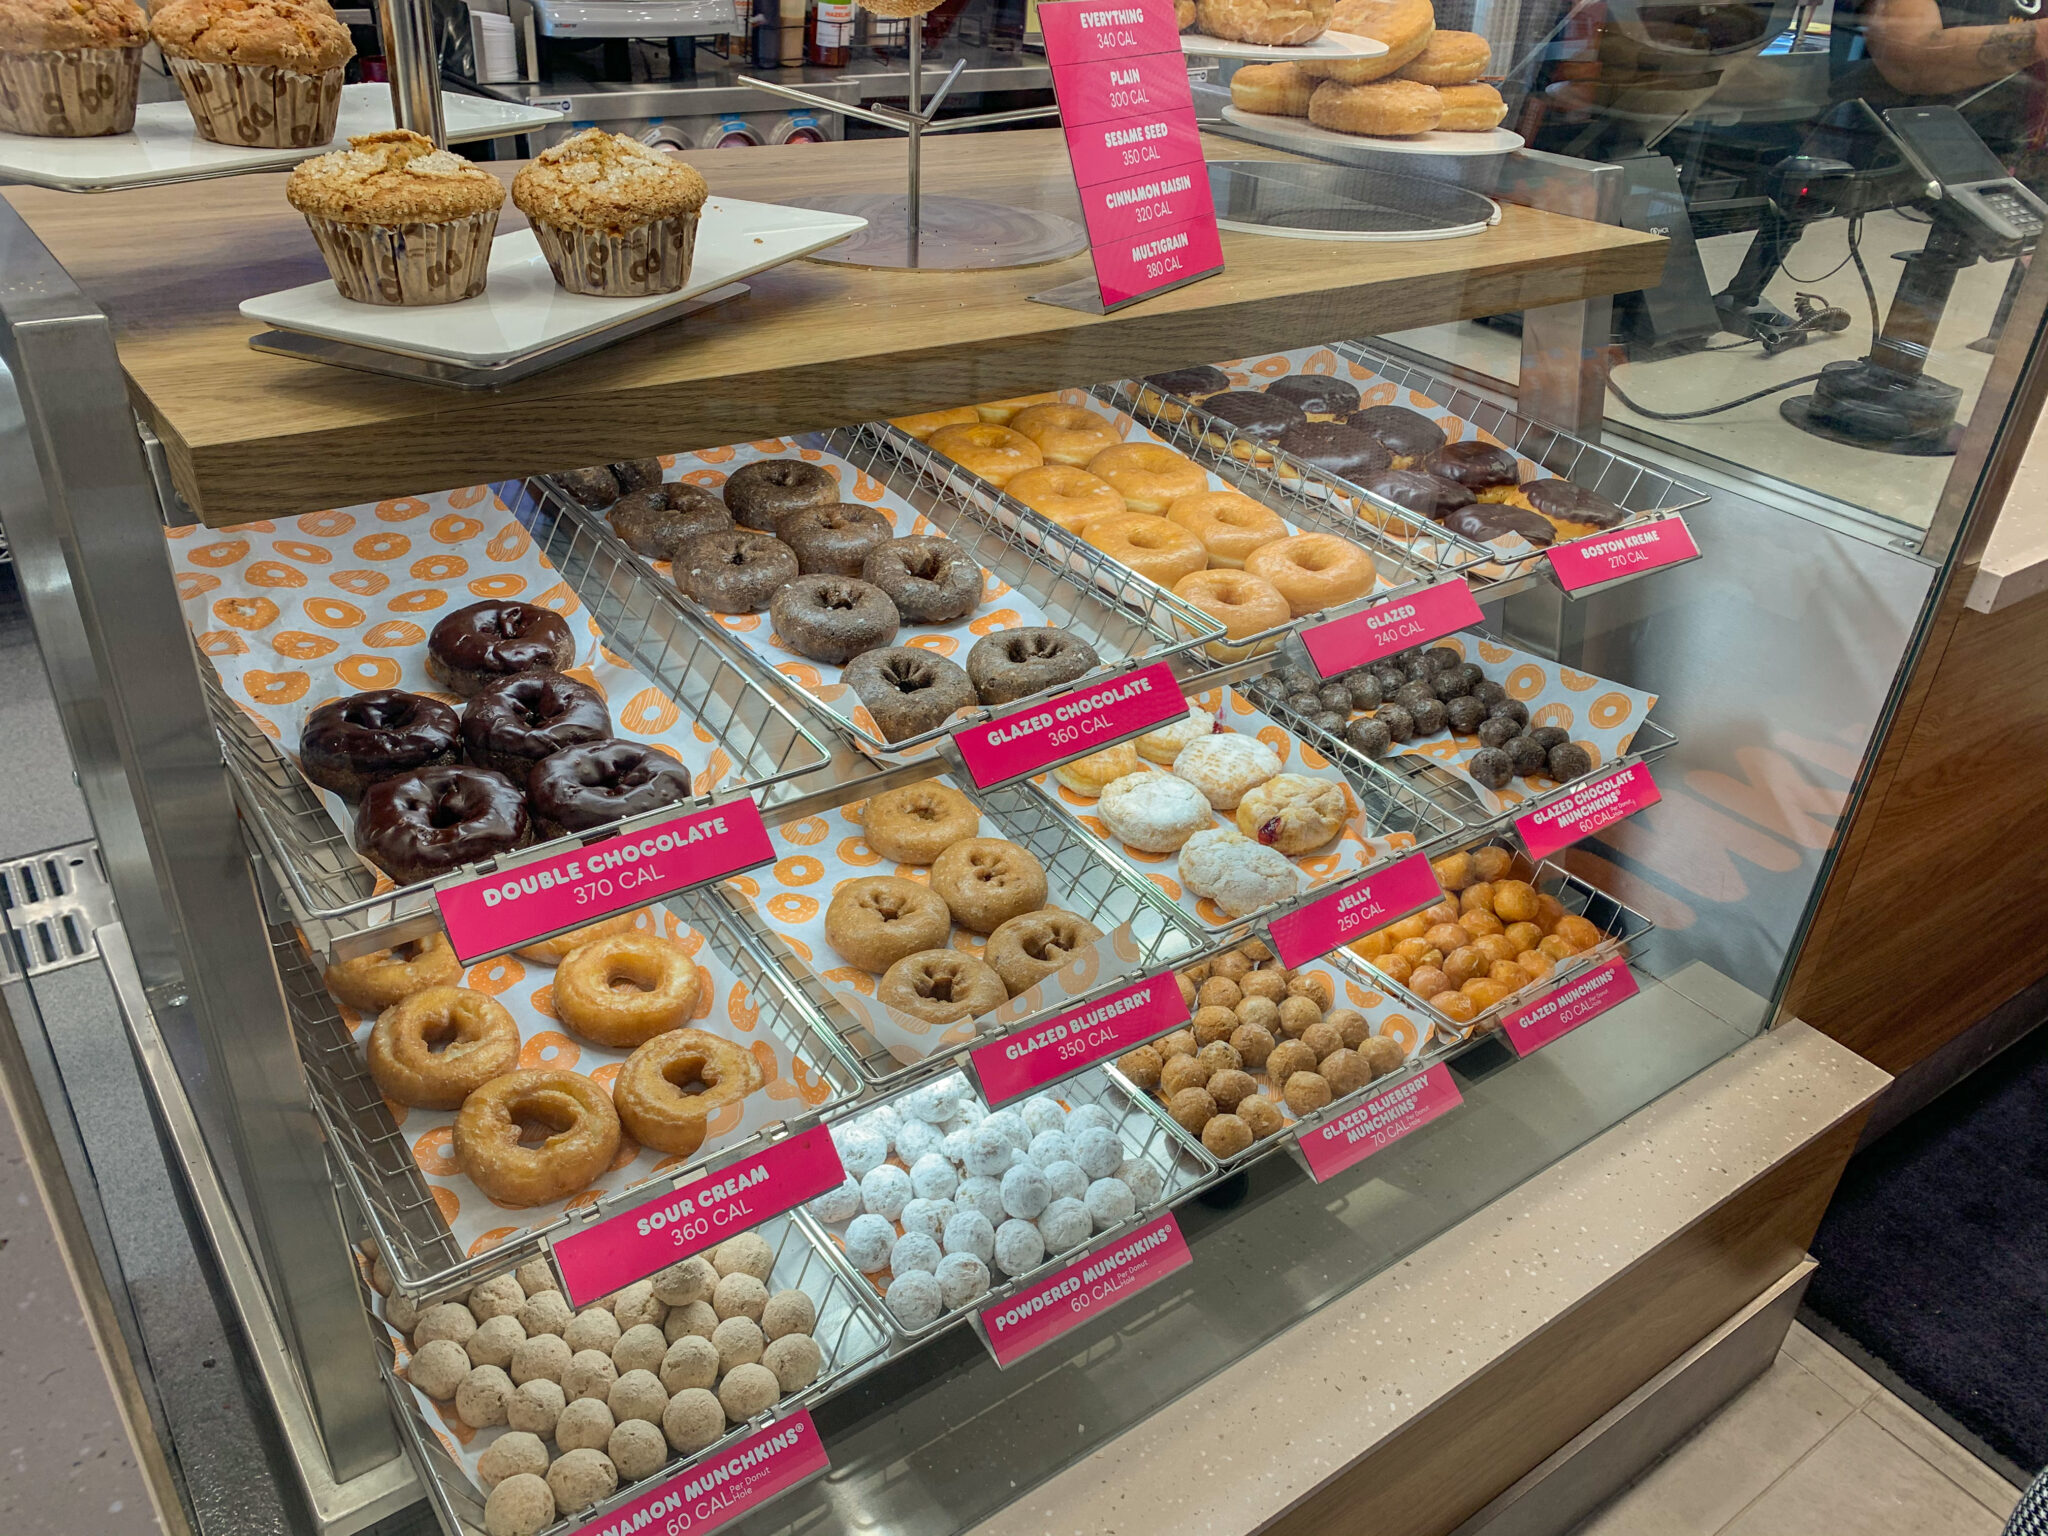 Dunkin' donut selection